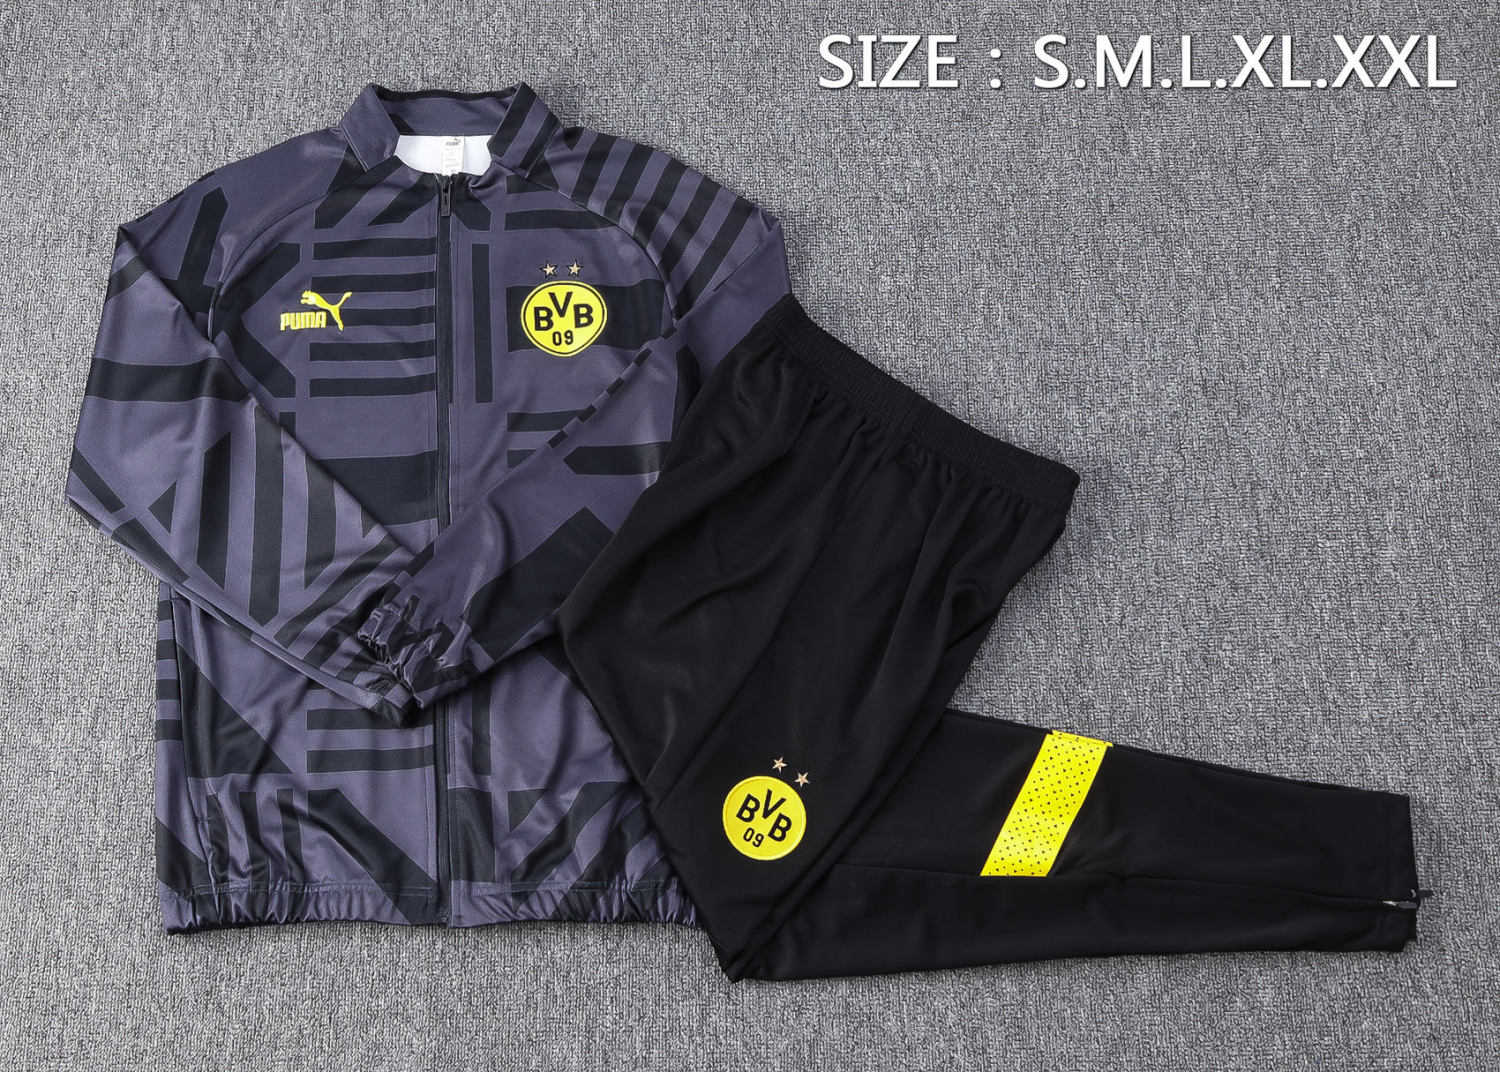 Borussia Dortmund Soccer Jacket + Pants Replica Grey - Black 2022/23 Mens